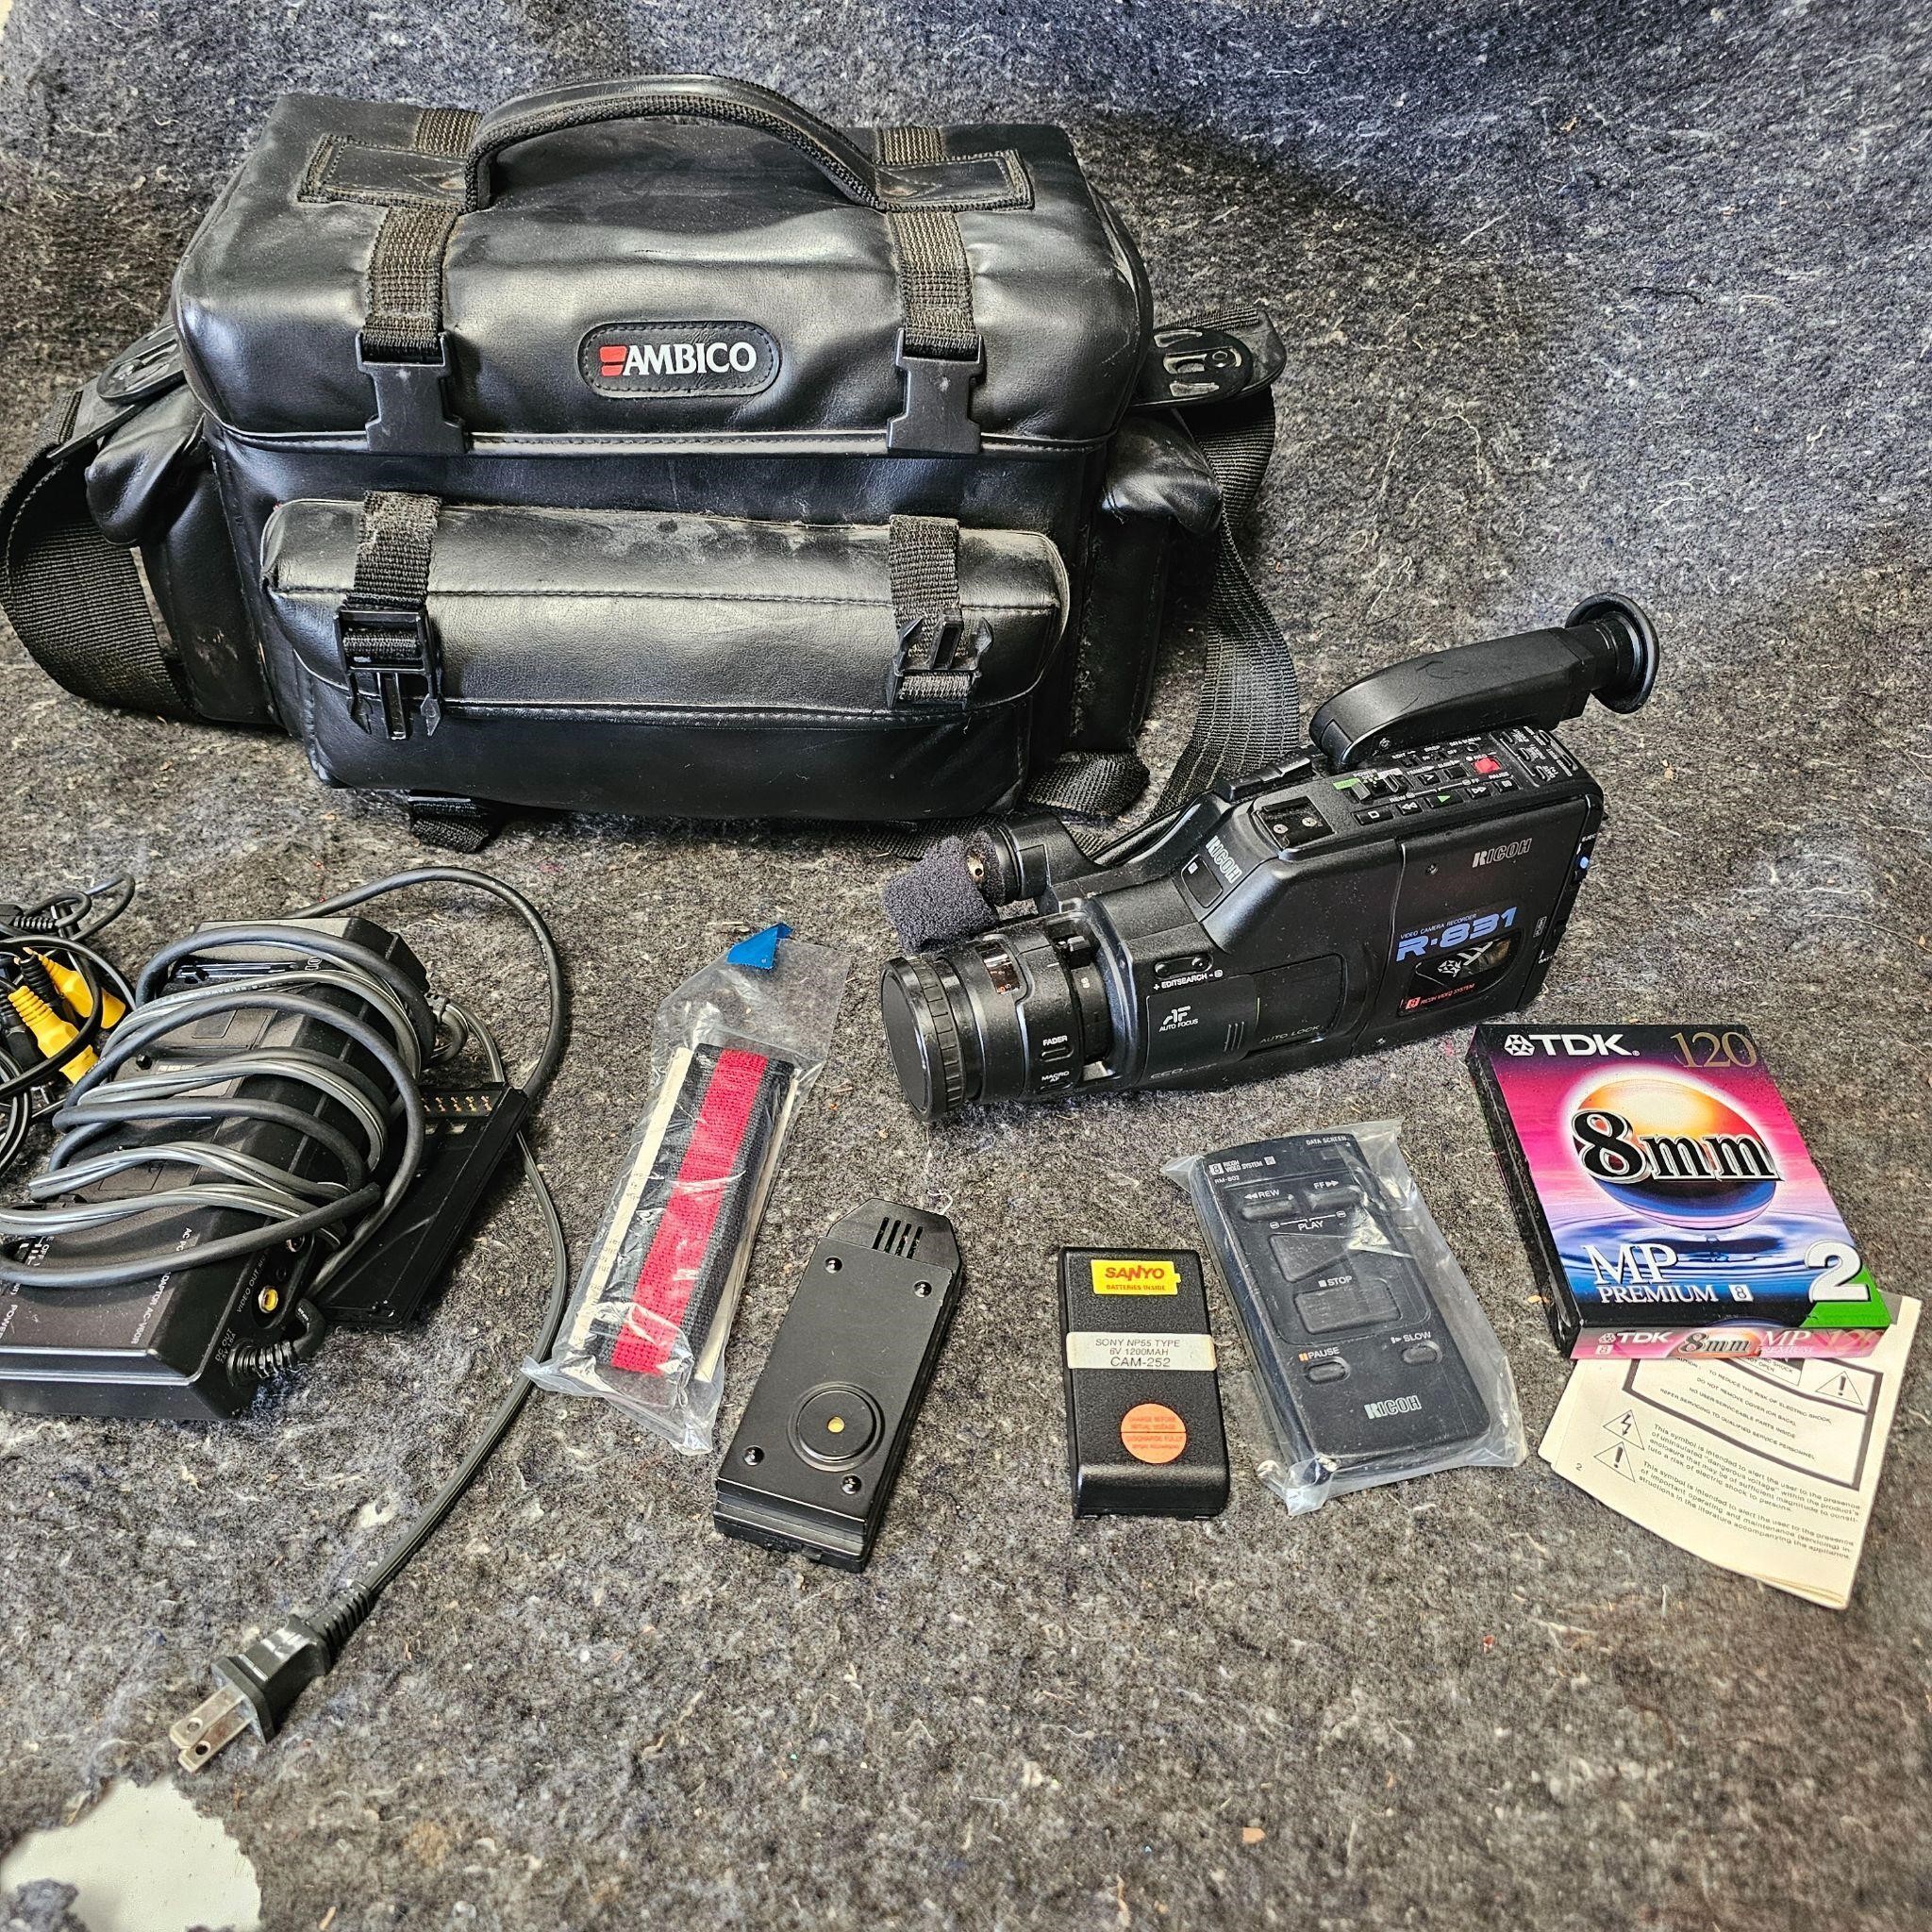 Ricoh video camera r-831